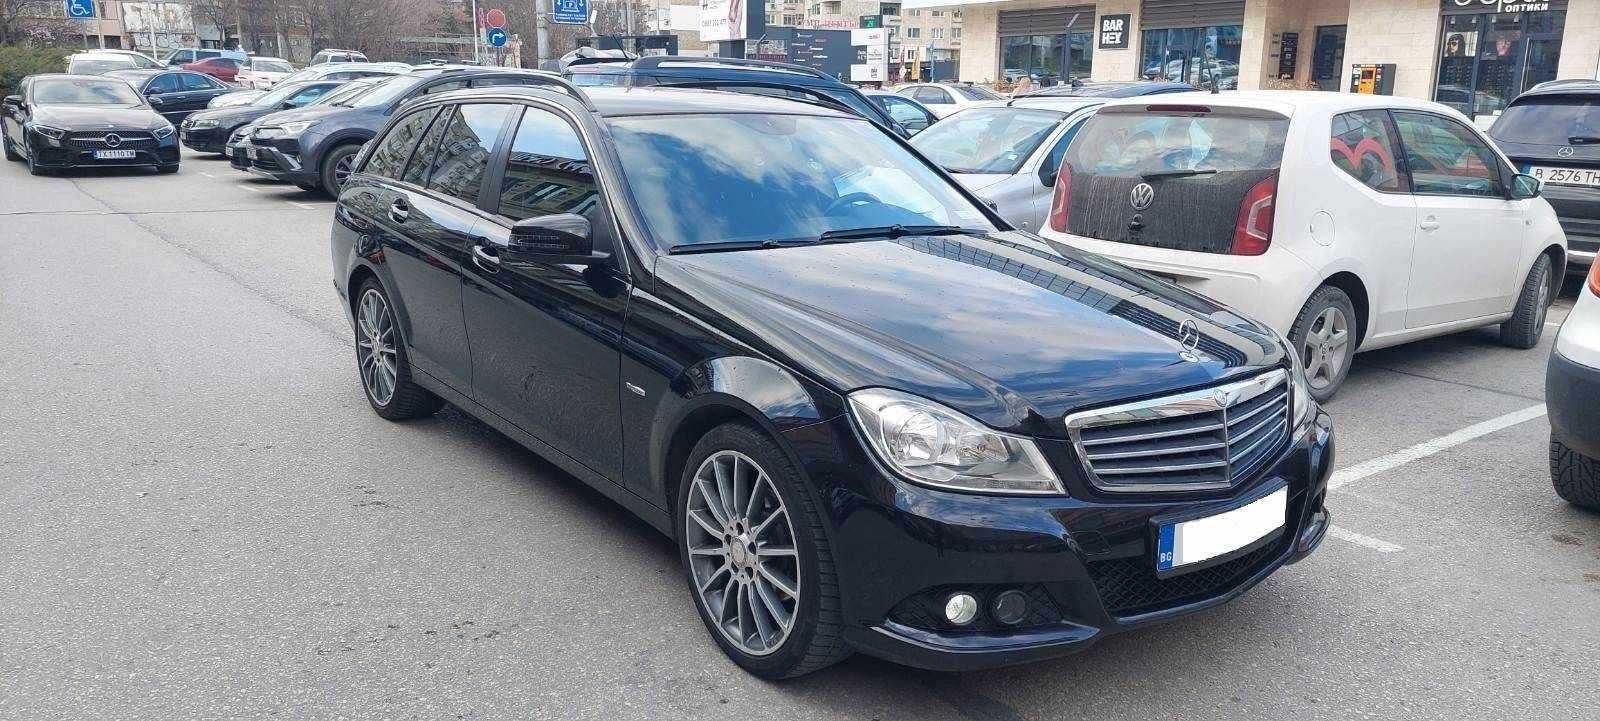 Mercedes C200 feis